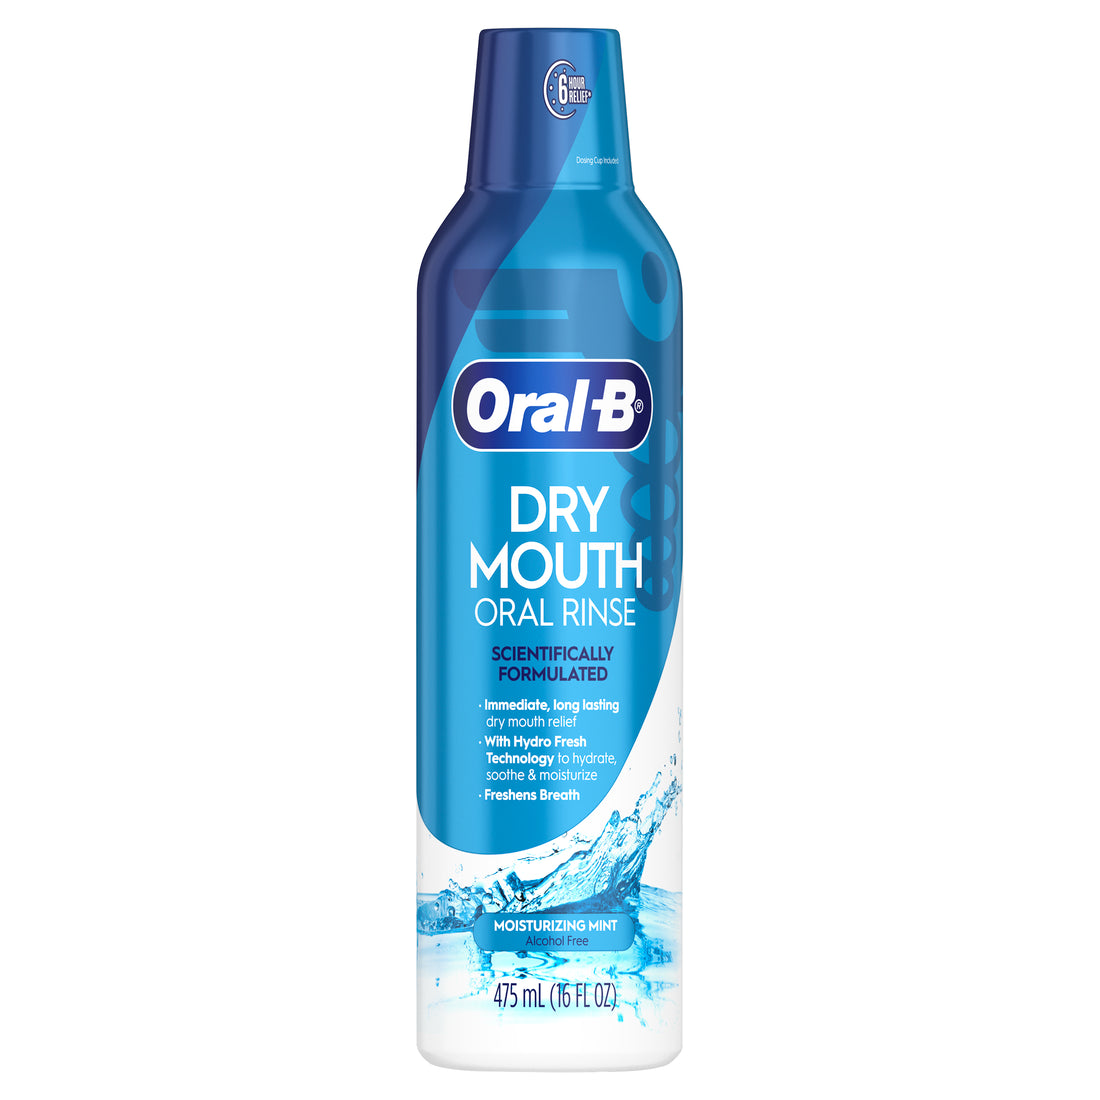 Oral B Dry Mouth Oral Rinse Moisturizing Mint Flavor 475ml - 16oz/4pk